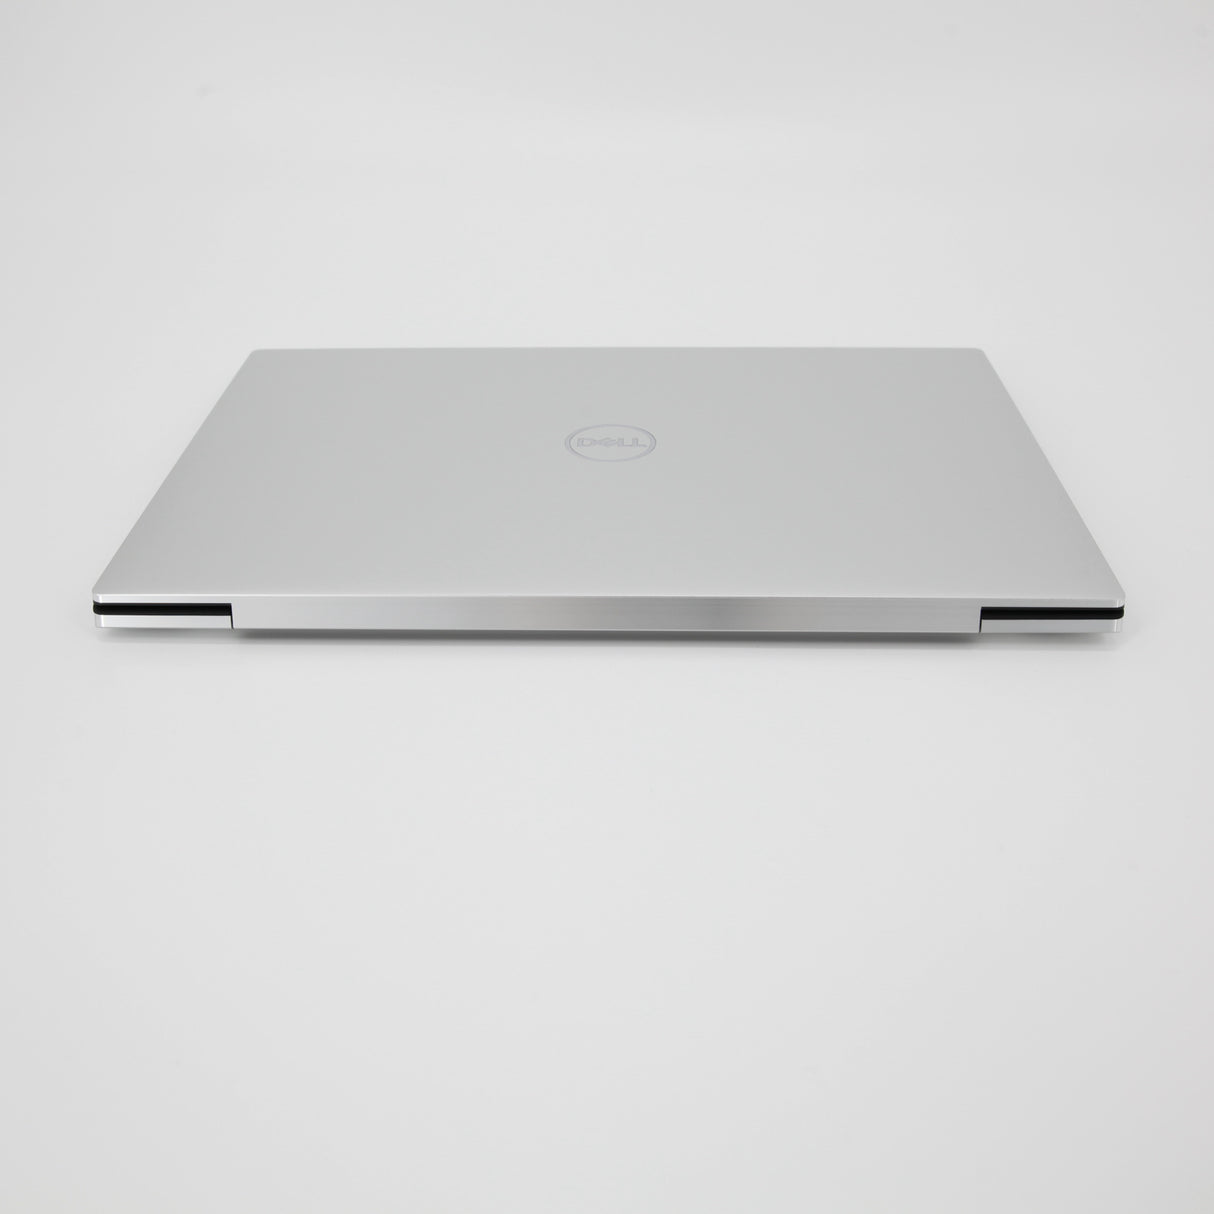 Dell XPS 13 9310 Laptop: Intel Core i7 11th Gen, 512GB SSD, 16GB RAM, Warranty - GreenGreenStoreUK